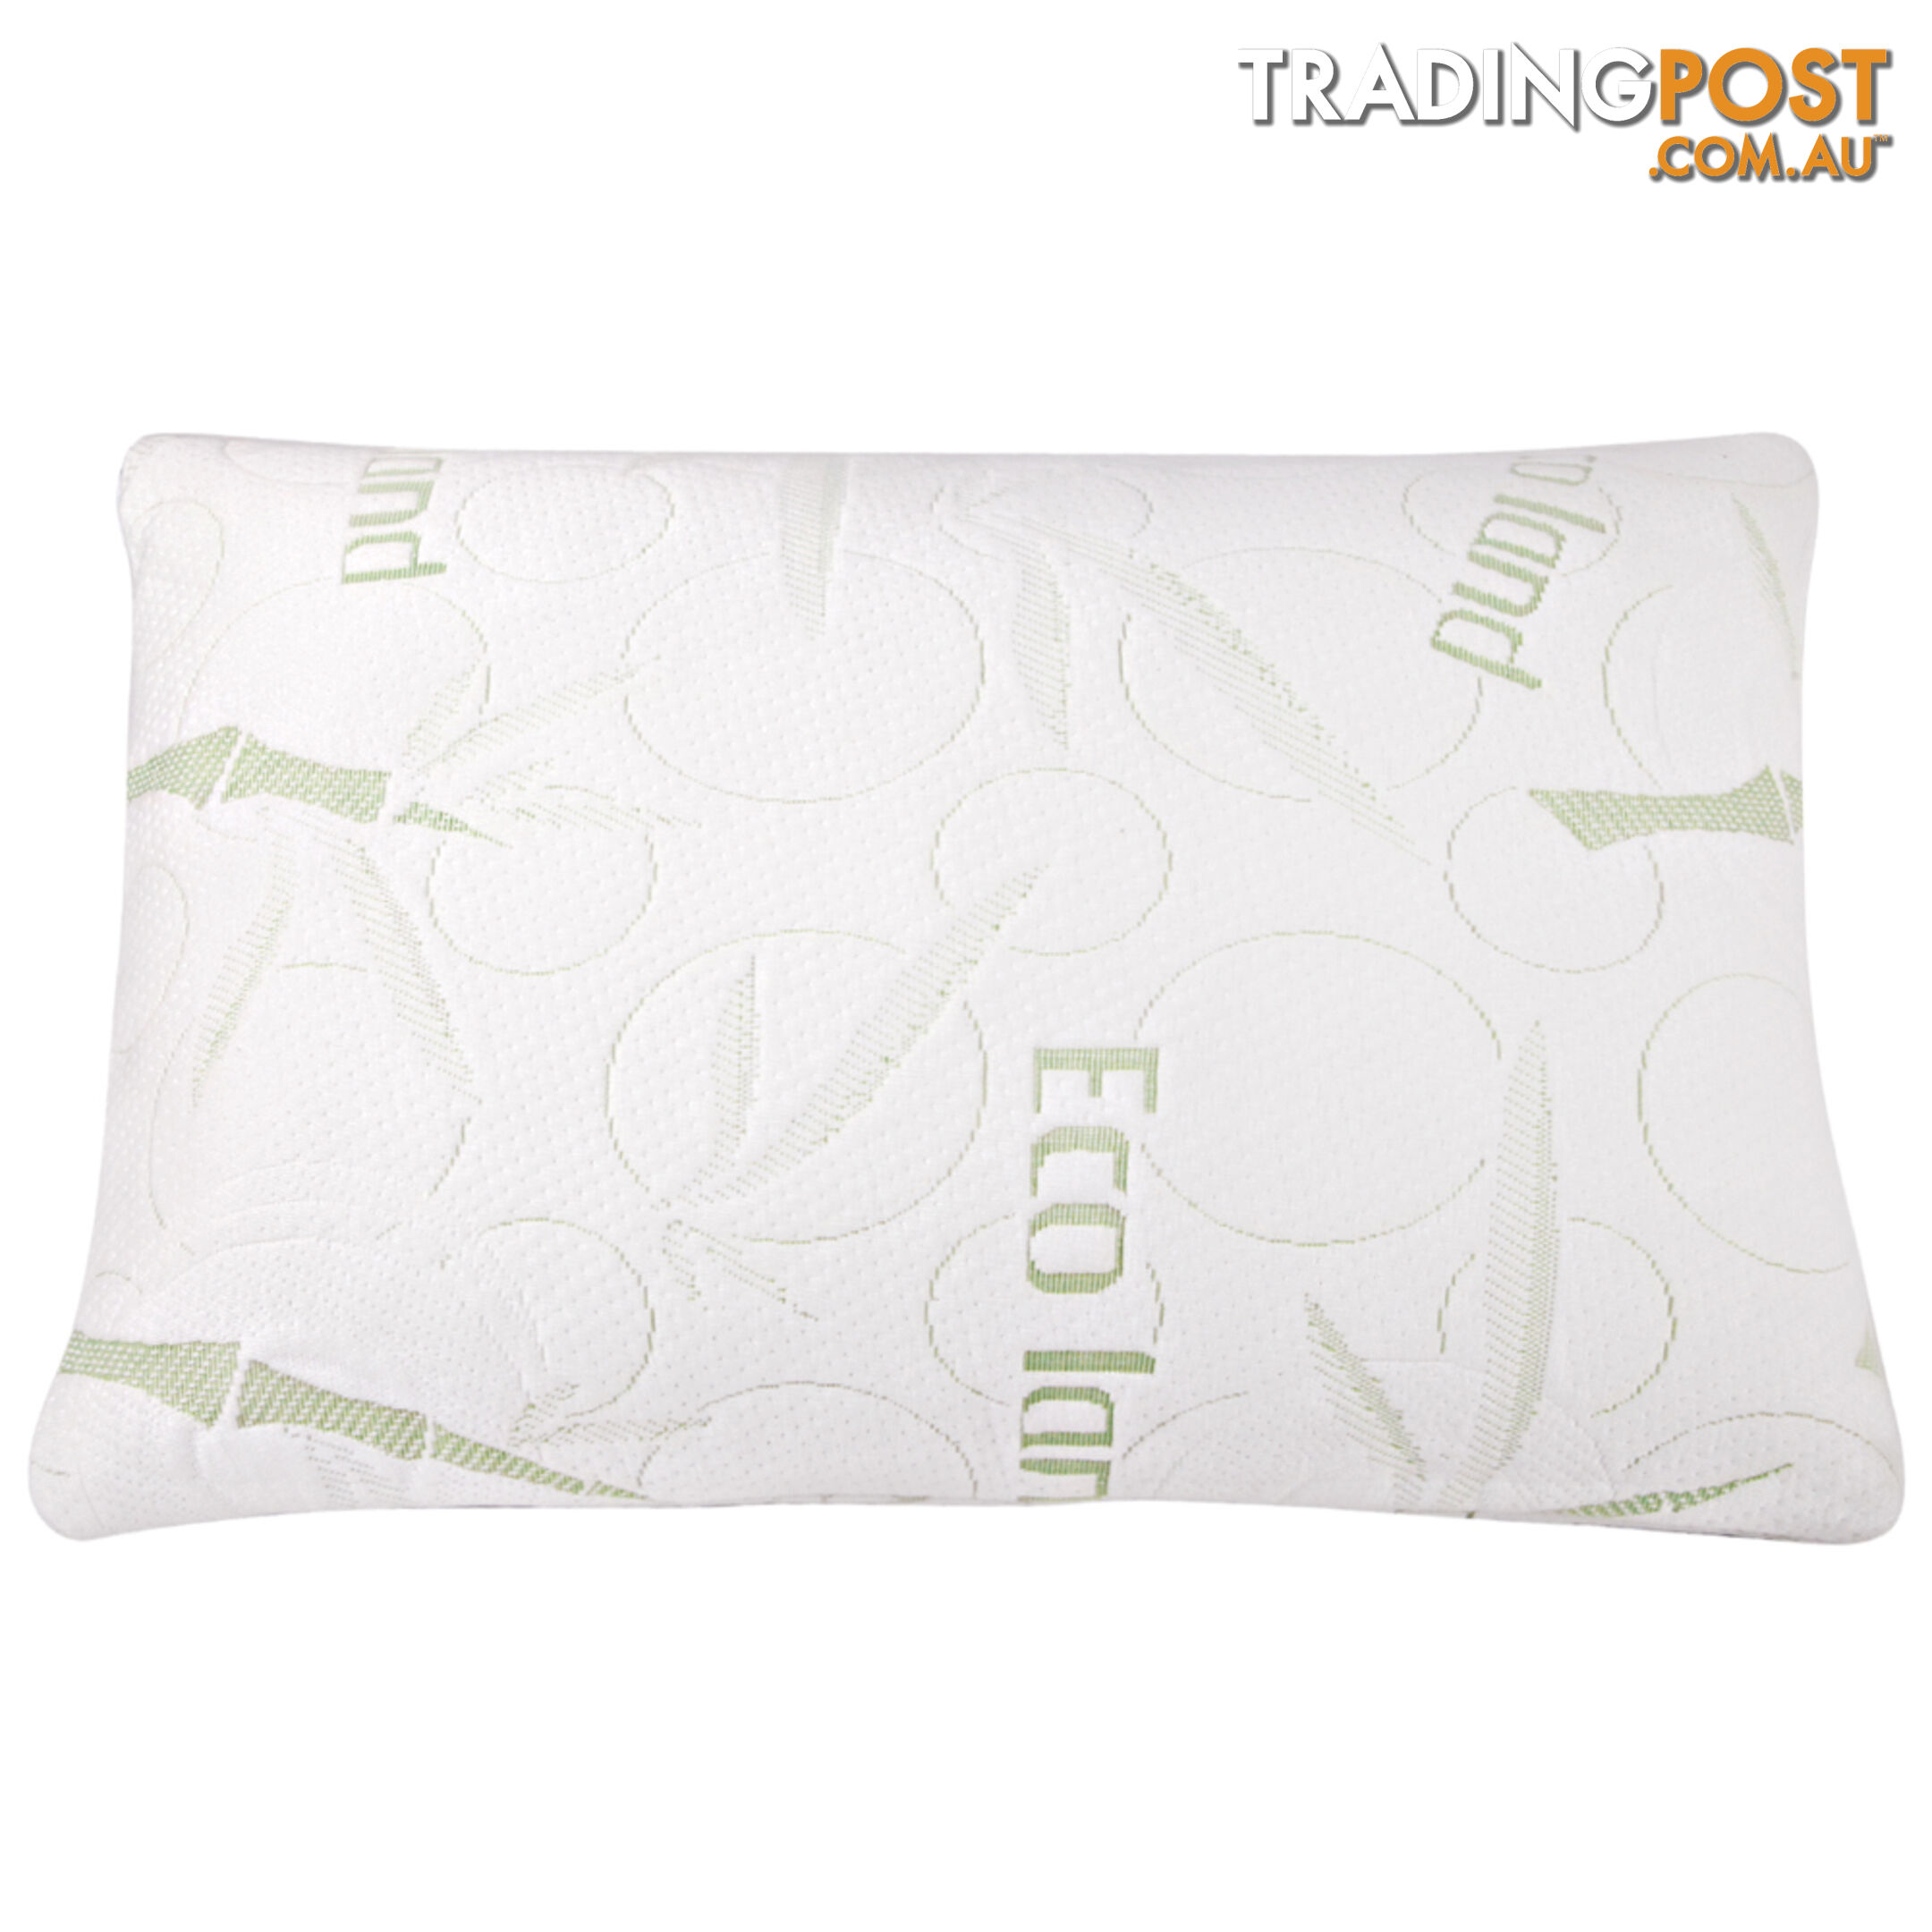 Set of 2 Bamboo Fabric Cover Shredded Memory Foam Pillow 70 x 40 cm